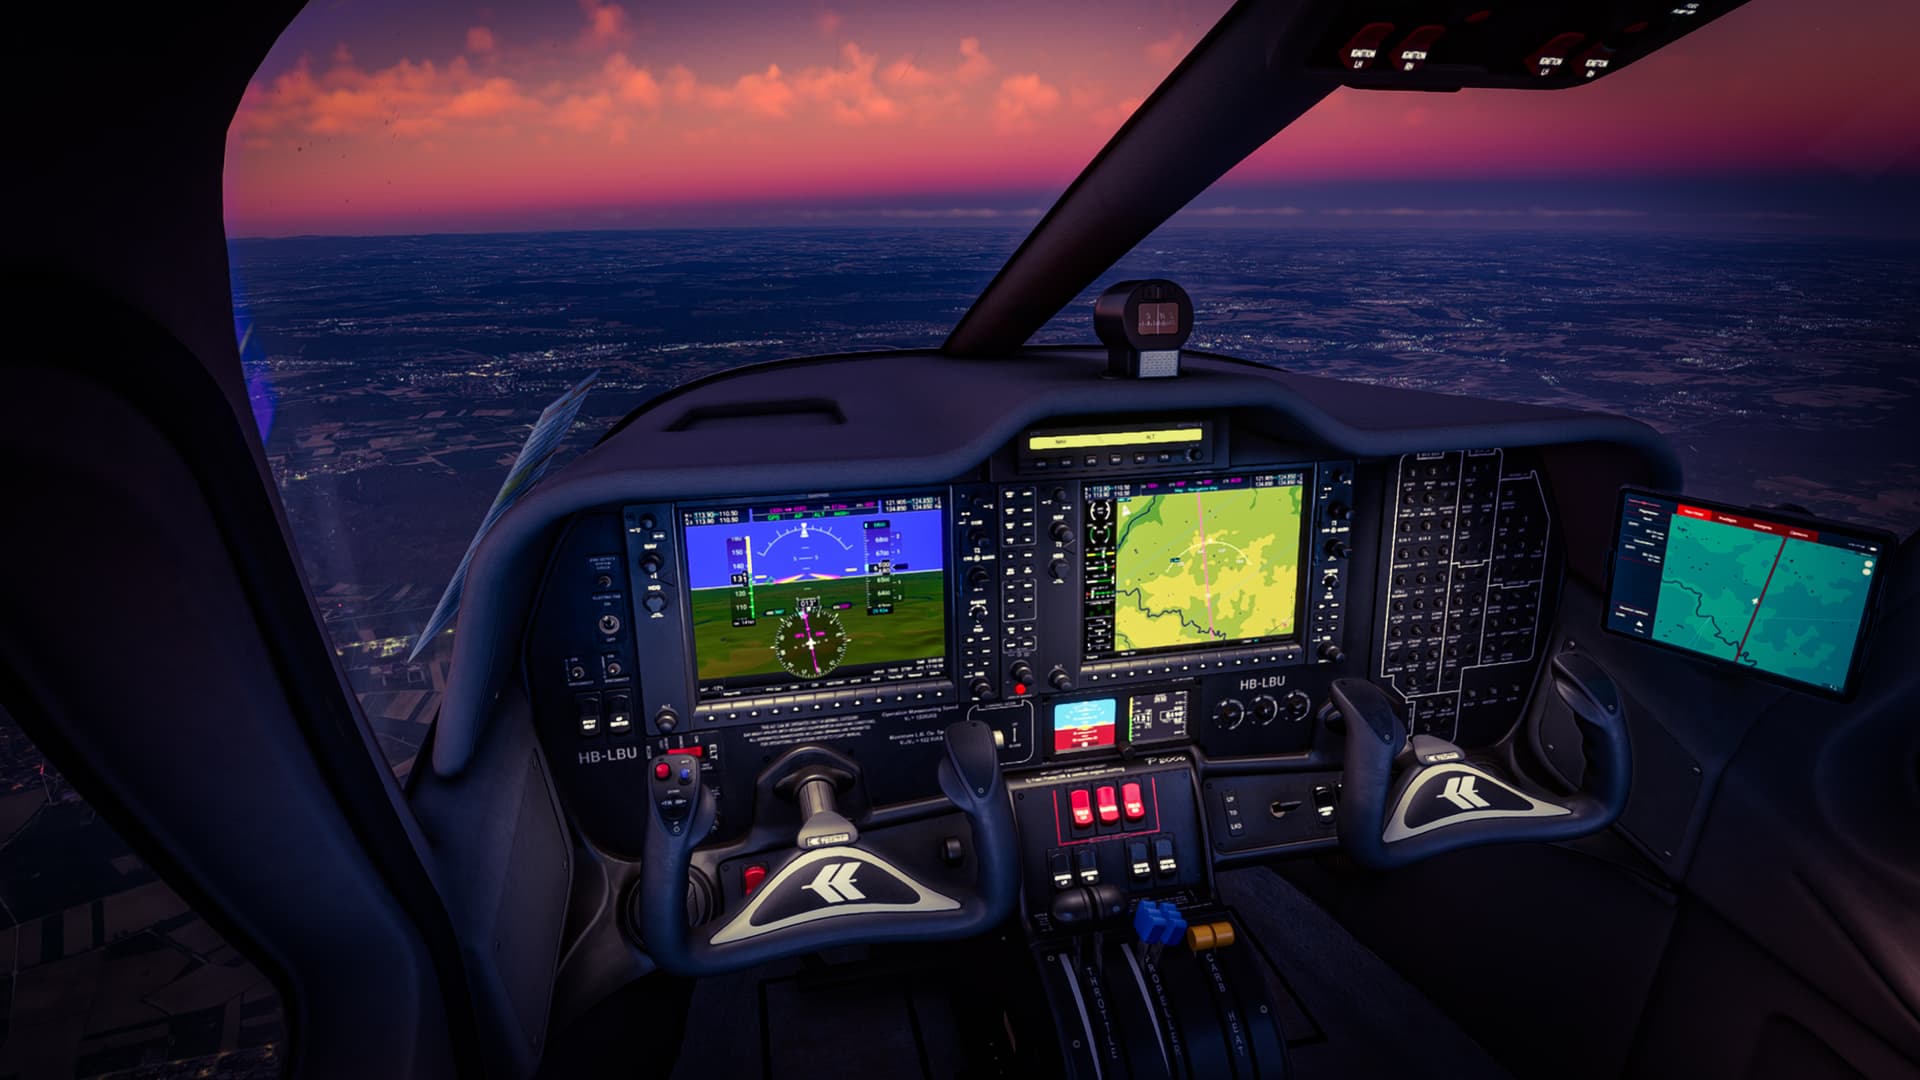 2024 - Pilot active outside the Cockpit - Interactive walk around - MSFS  2024 - Microsoft Flight Simulator Forums